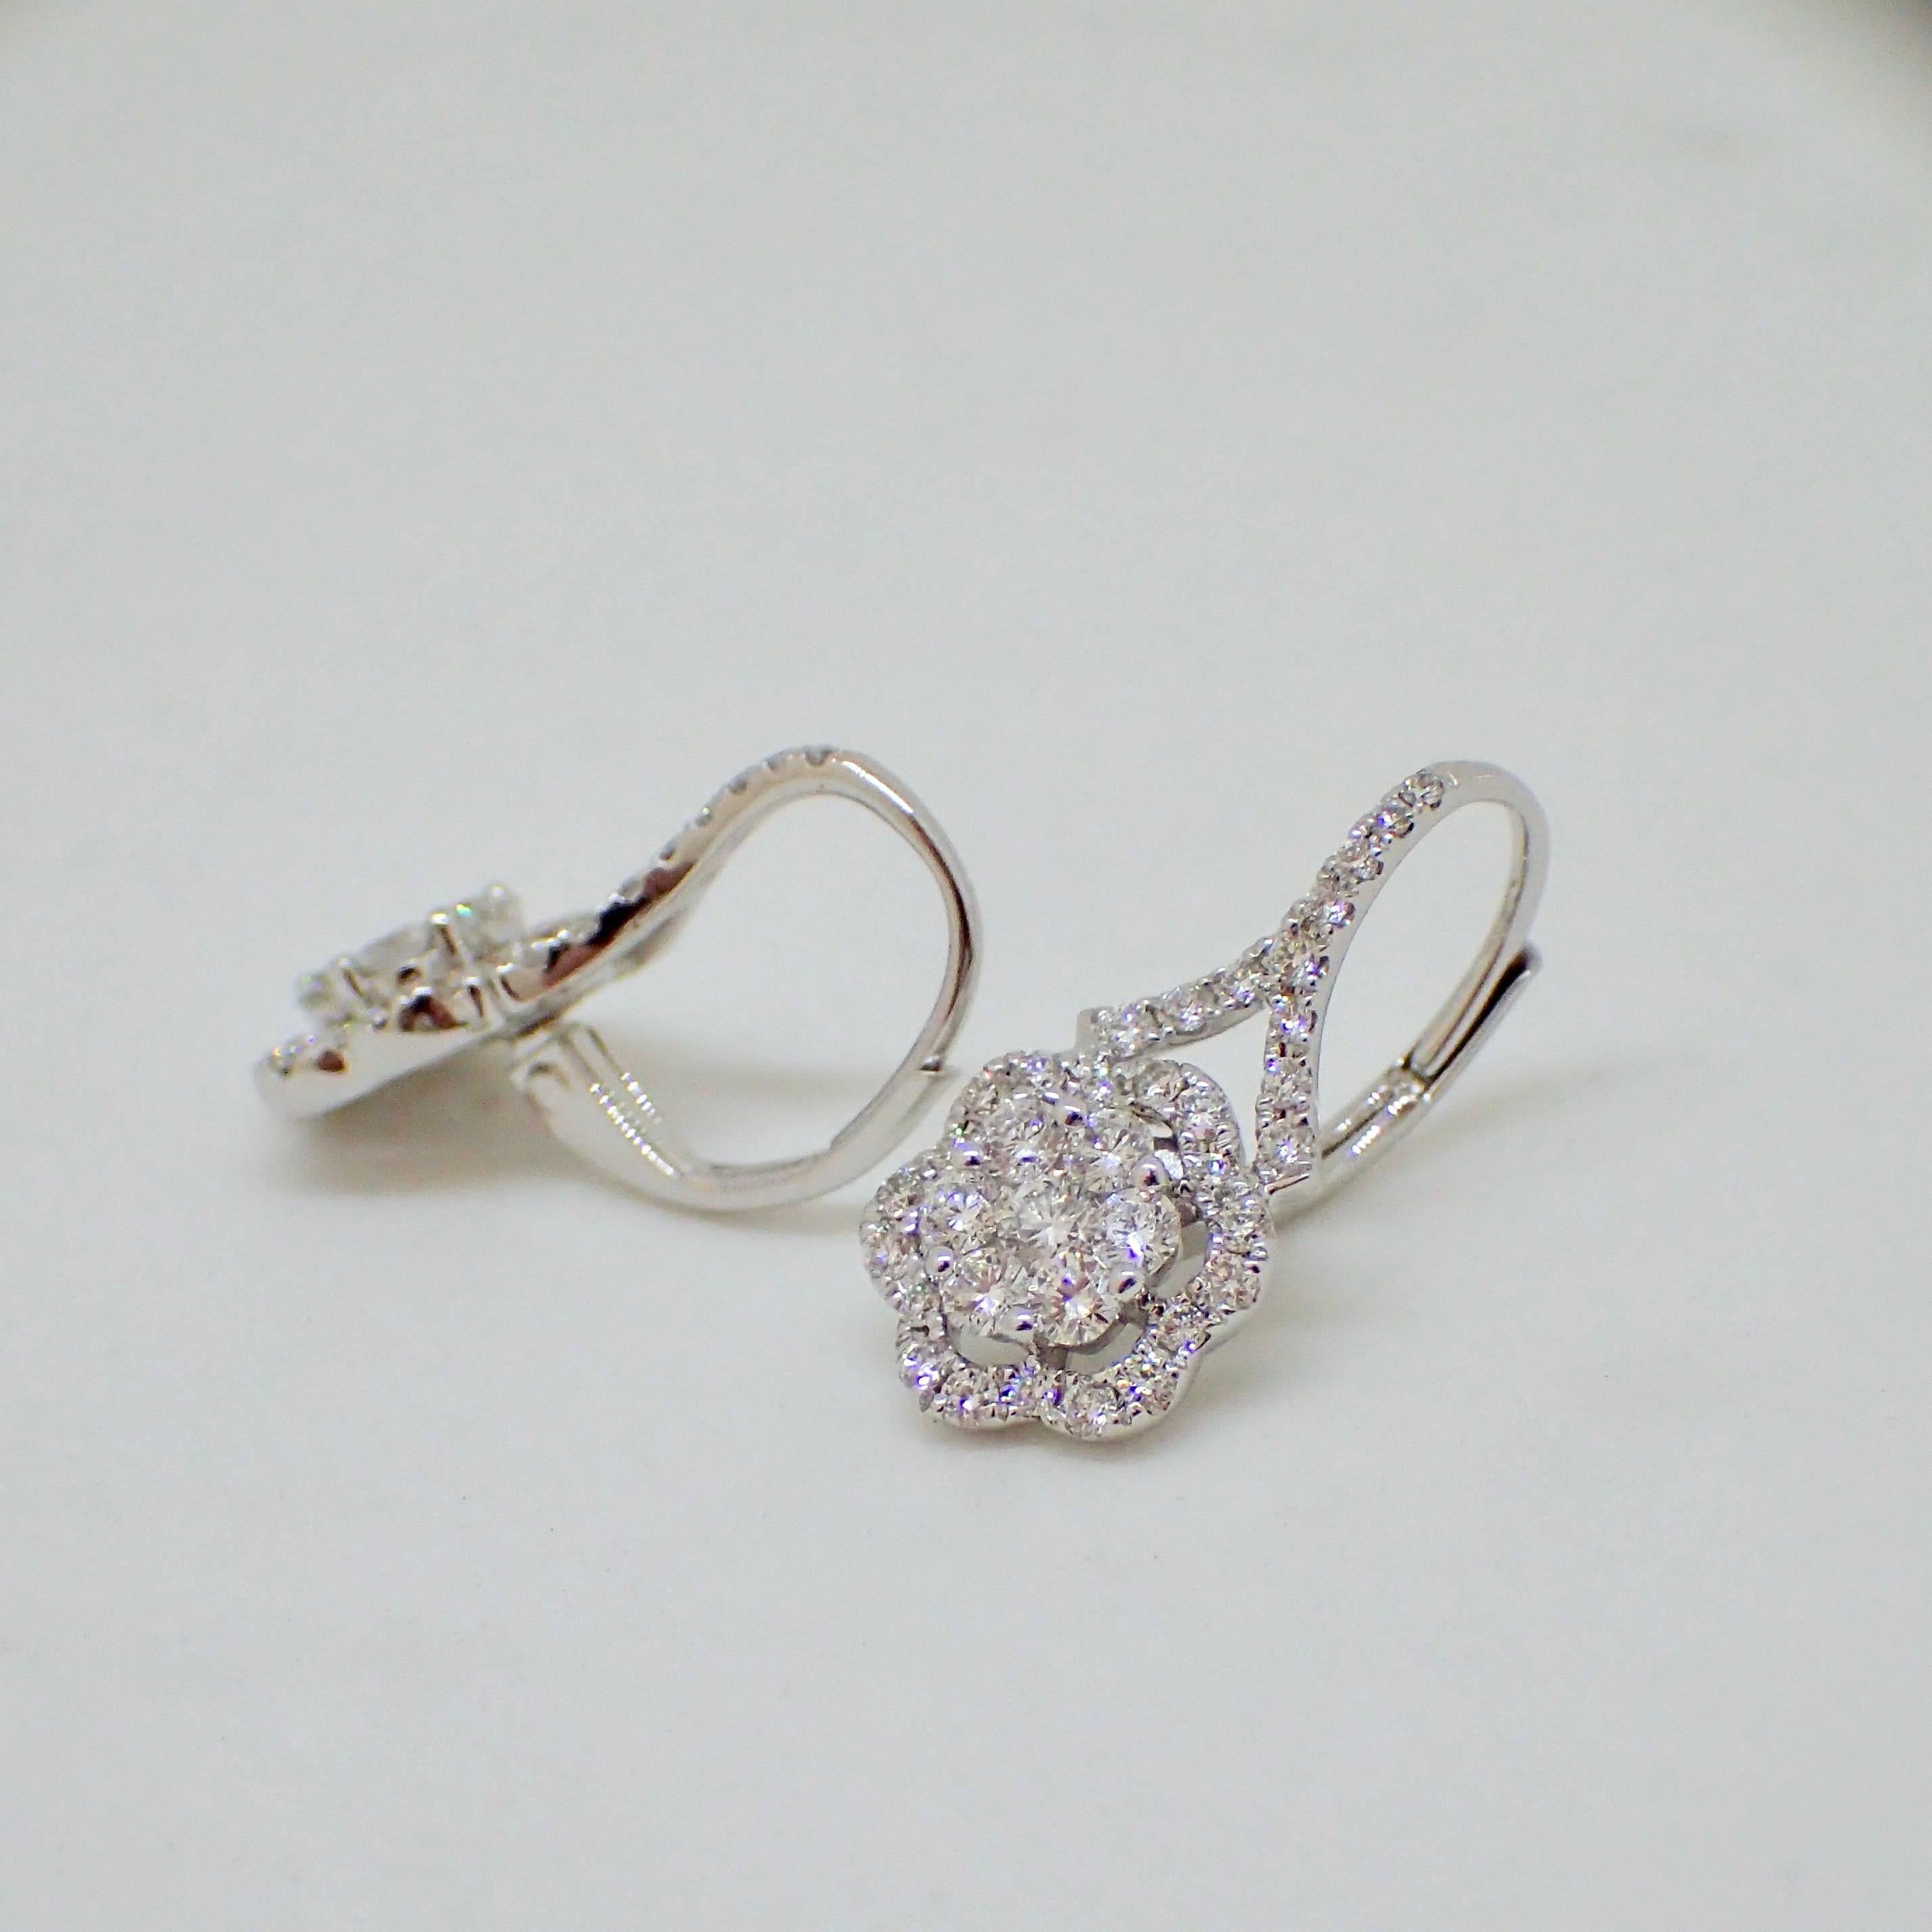 Women's 18 Karat White Gold Lever-Back Earrings with 1.01 Carat of Diamond